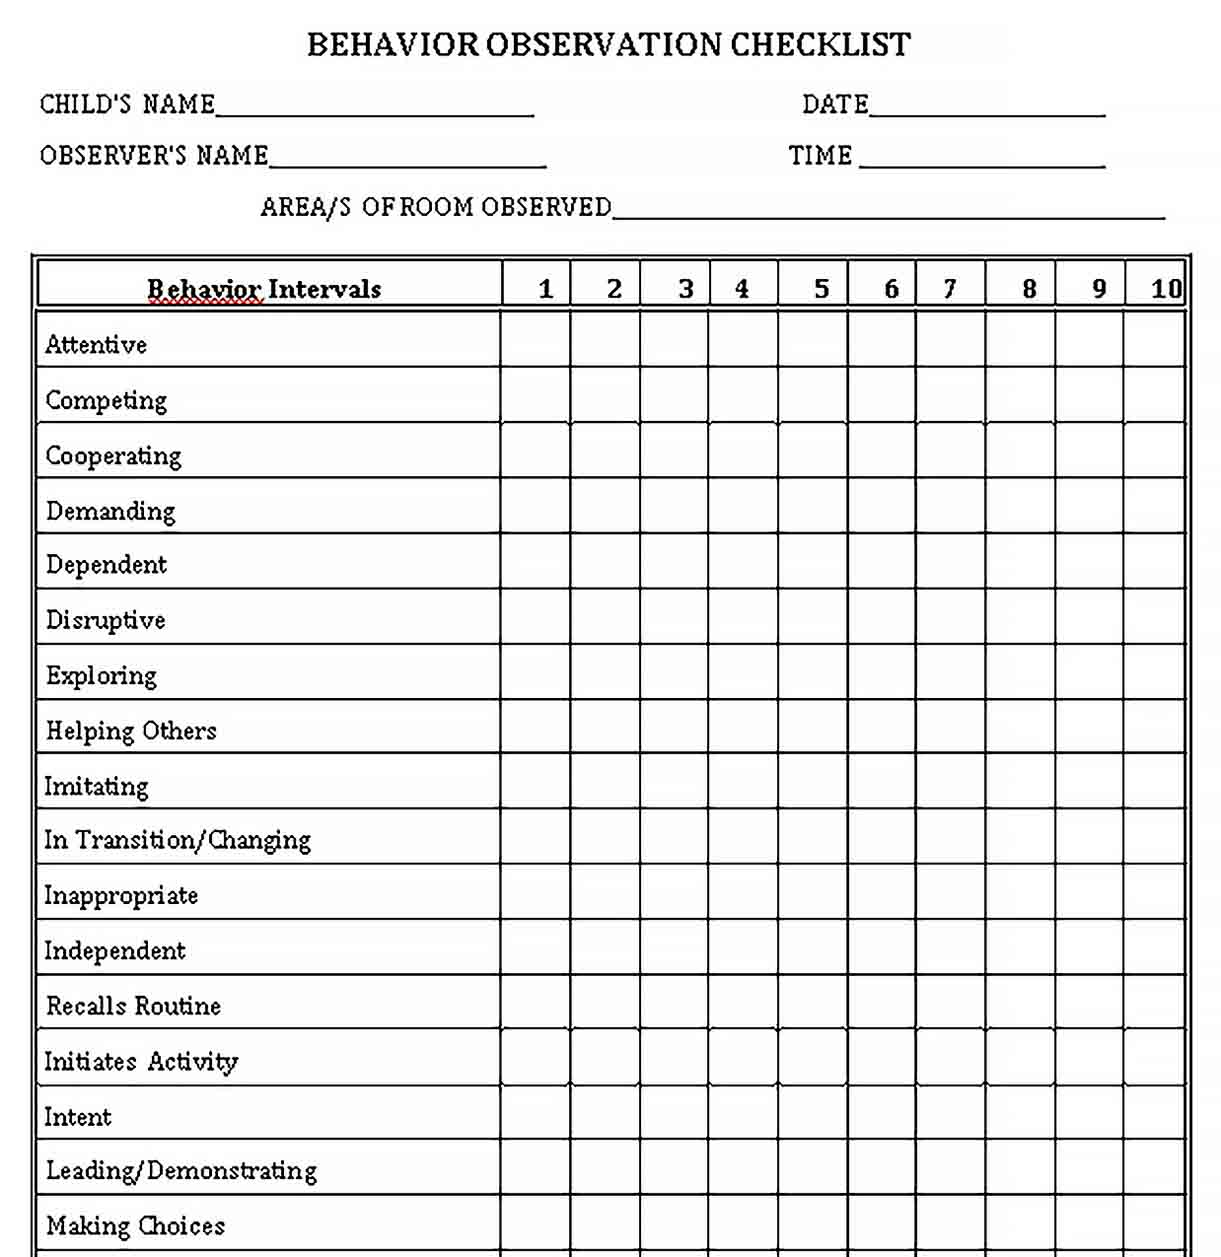 Sample Behavior Checklist Template  welding rodeo Designer For Student Behavior Checklist Template With Regard To Student Behavior Checklist Template